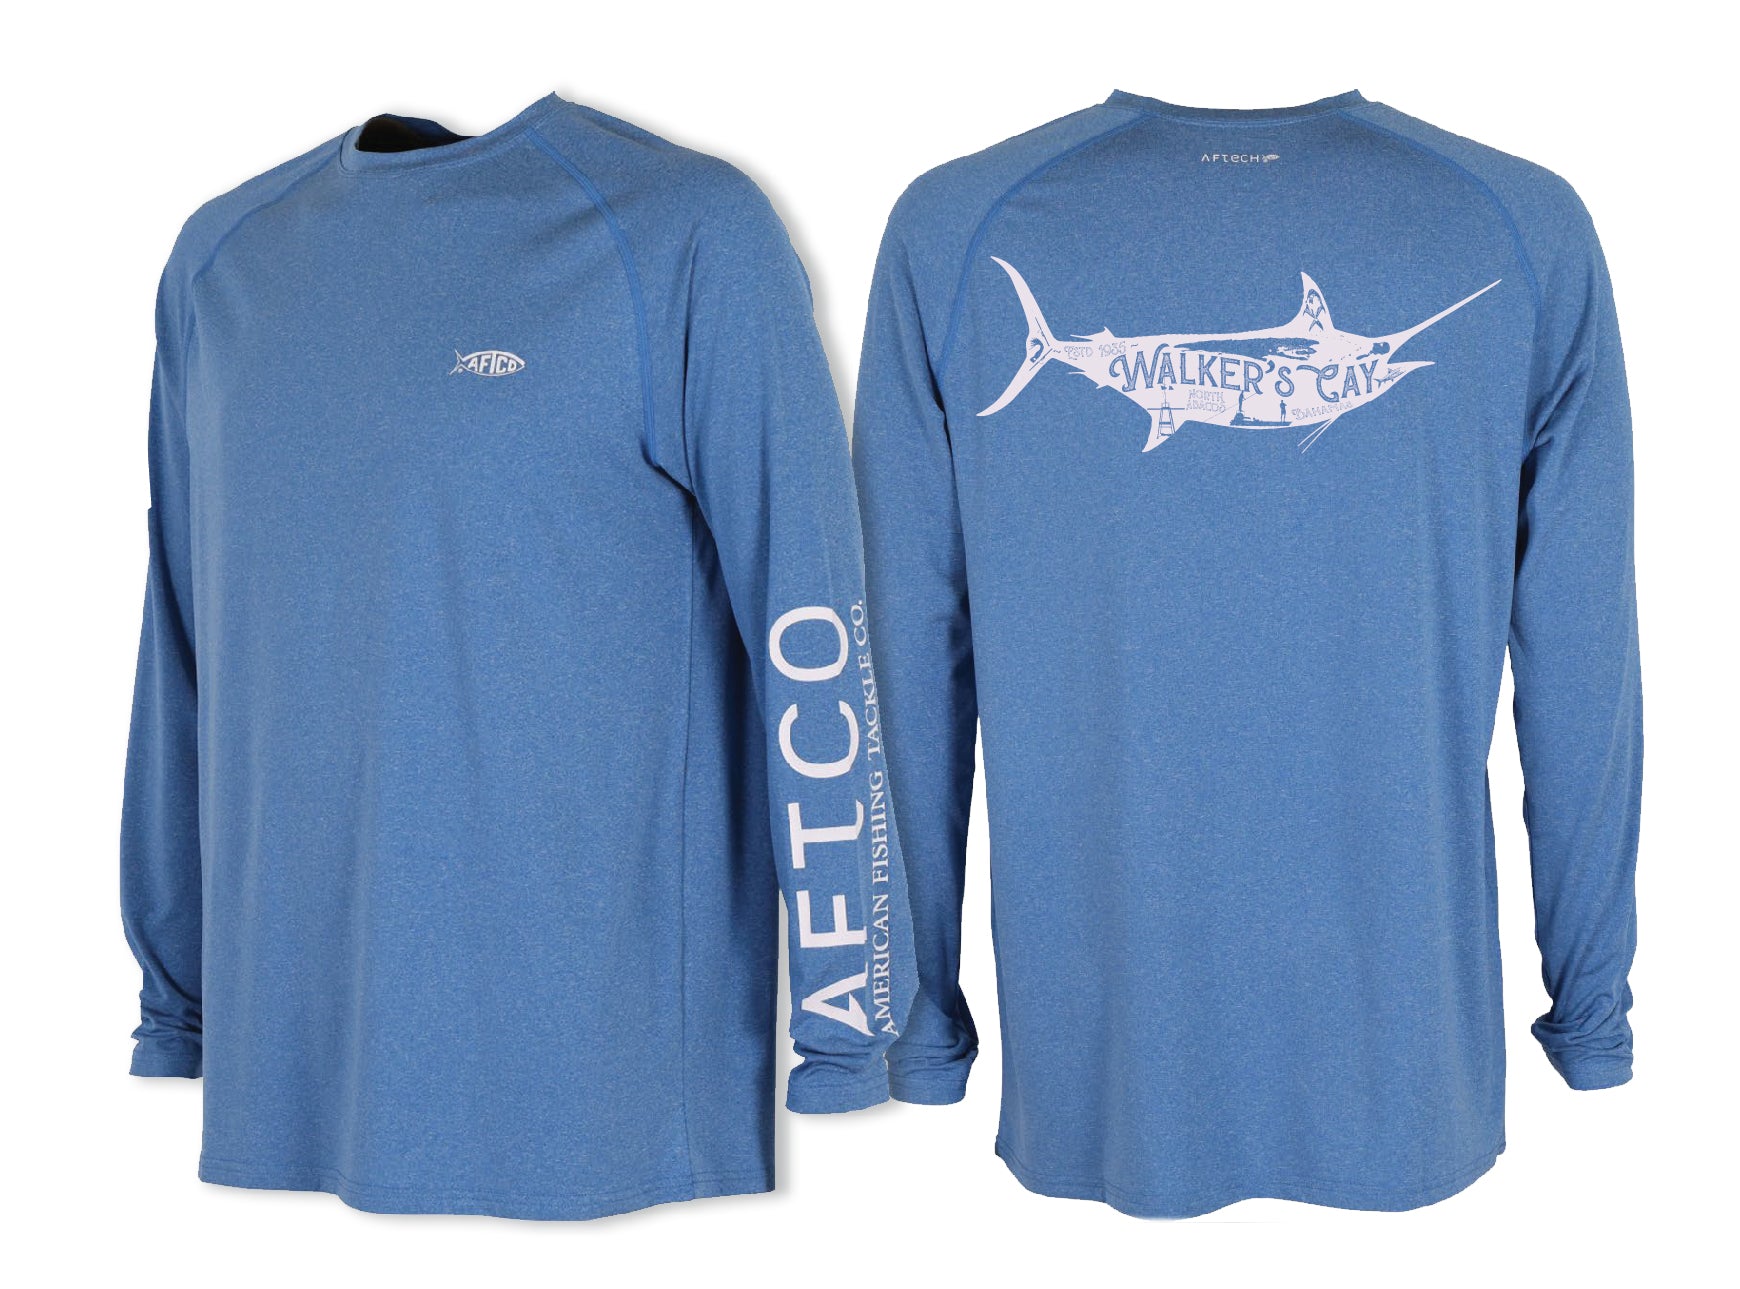 Fishing apparel review - Aftco Fish Ninja Fishing Shirt